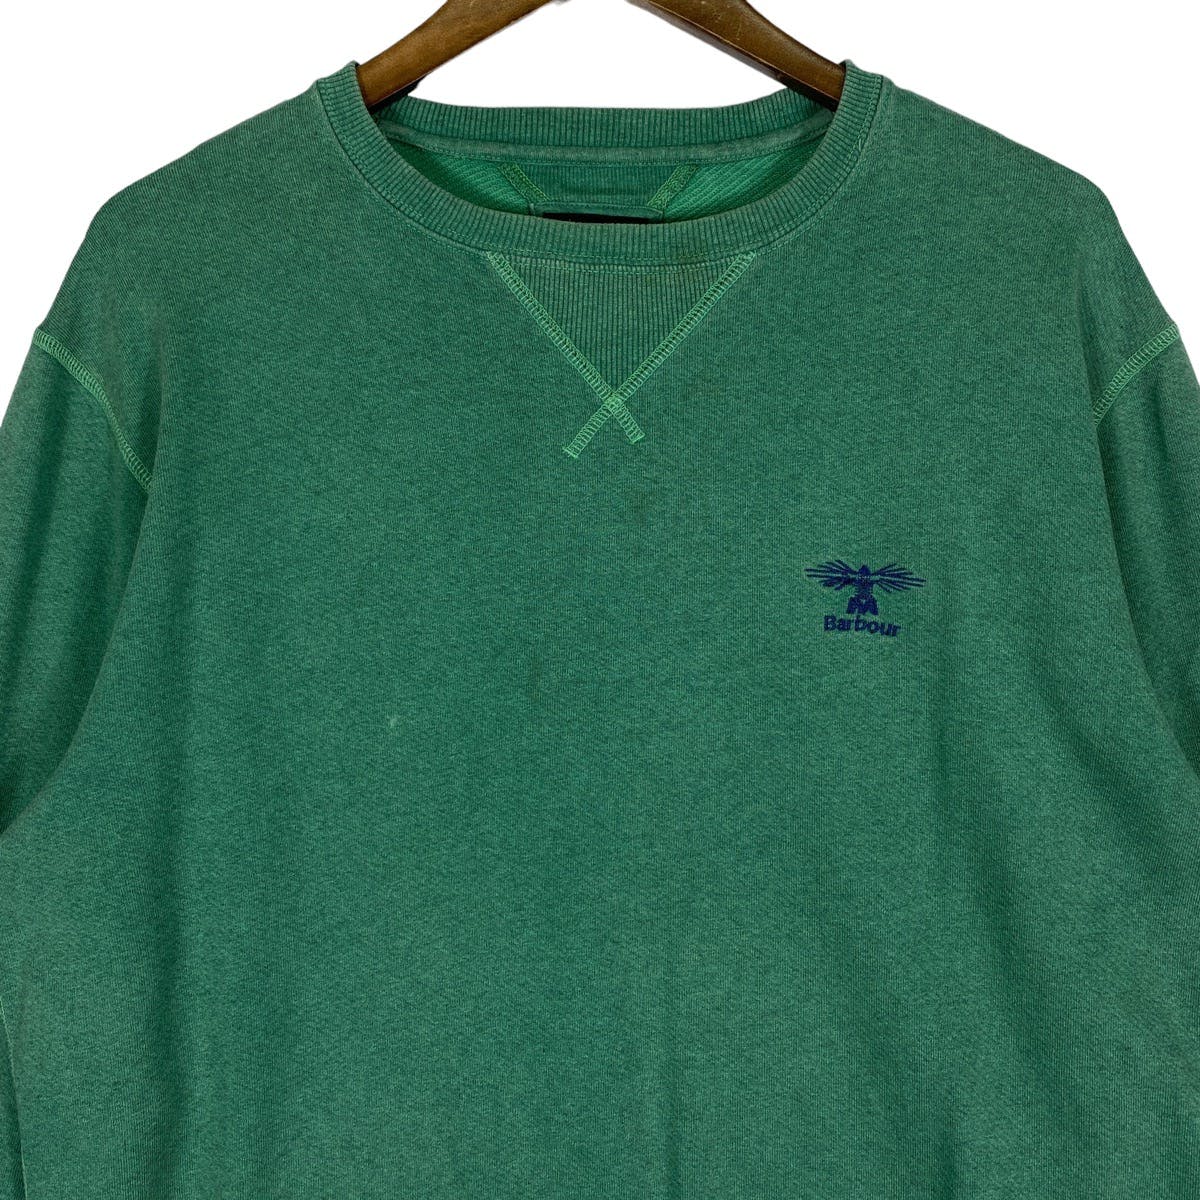 Vintage Barbour Sweatshirt Crewneck Made In Portugal - 5